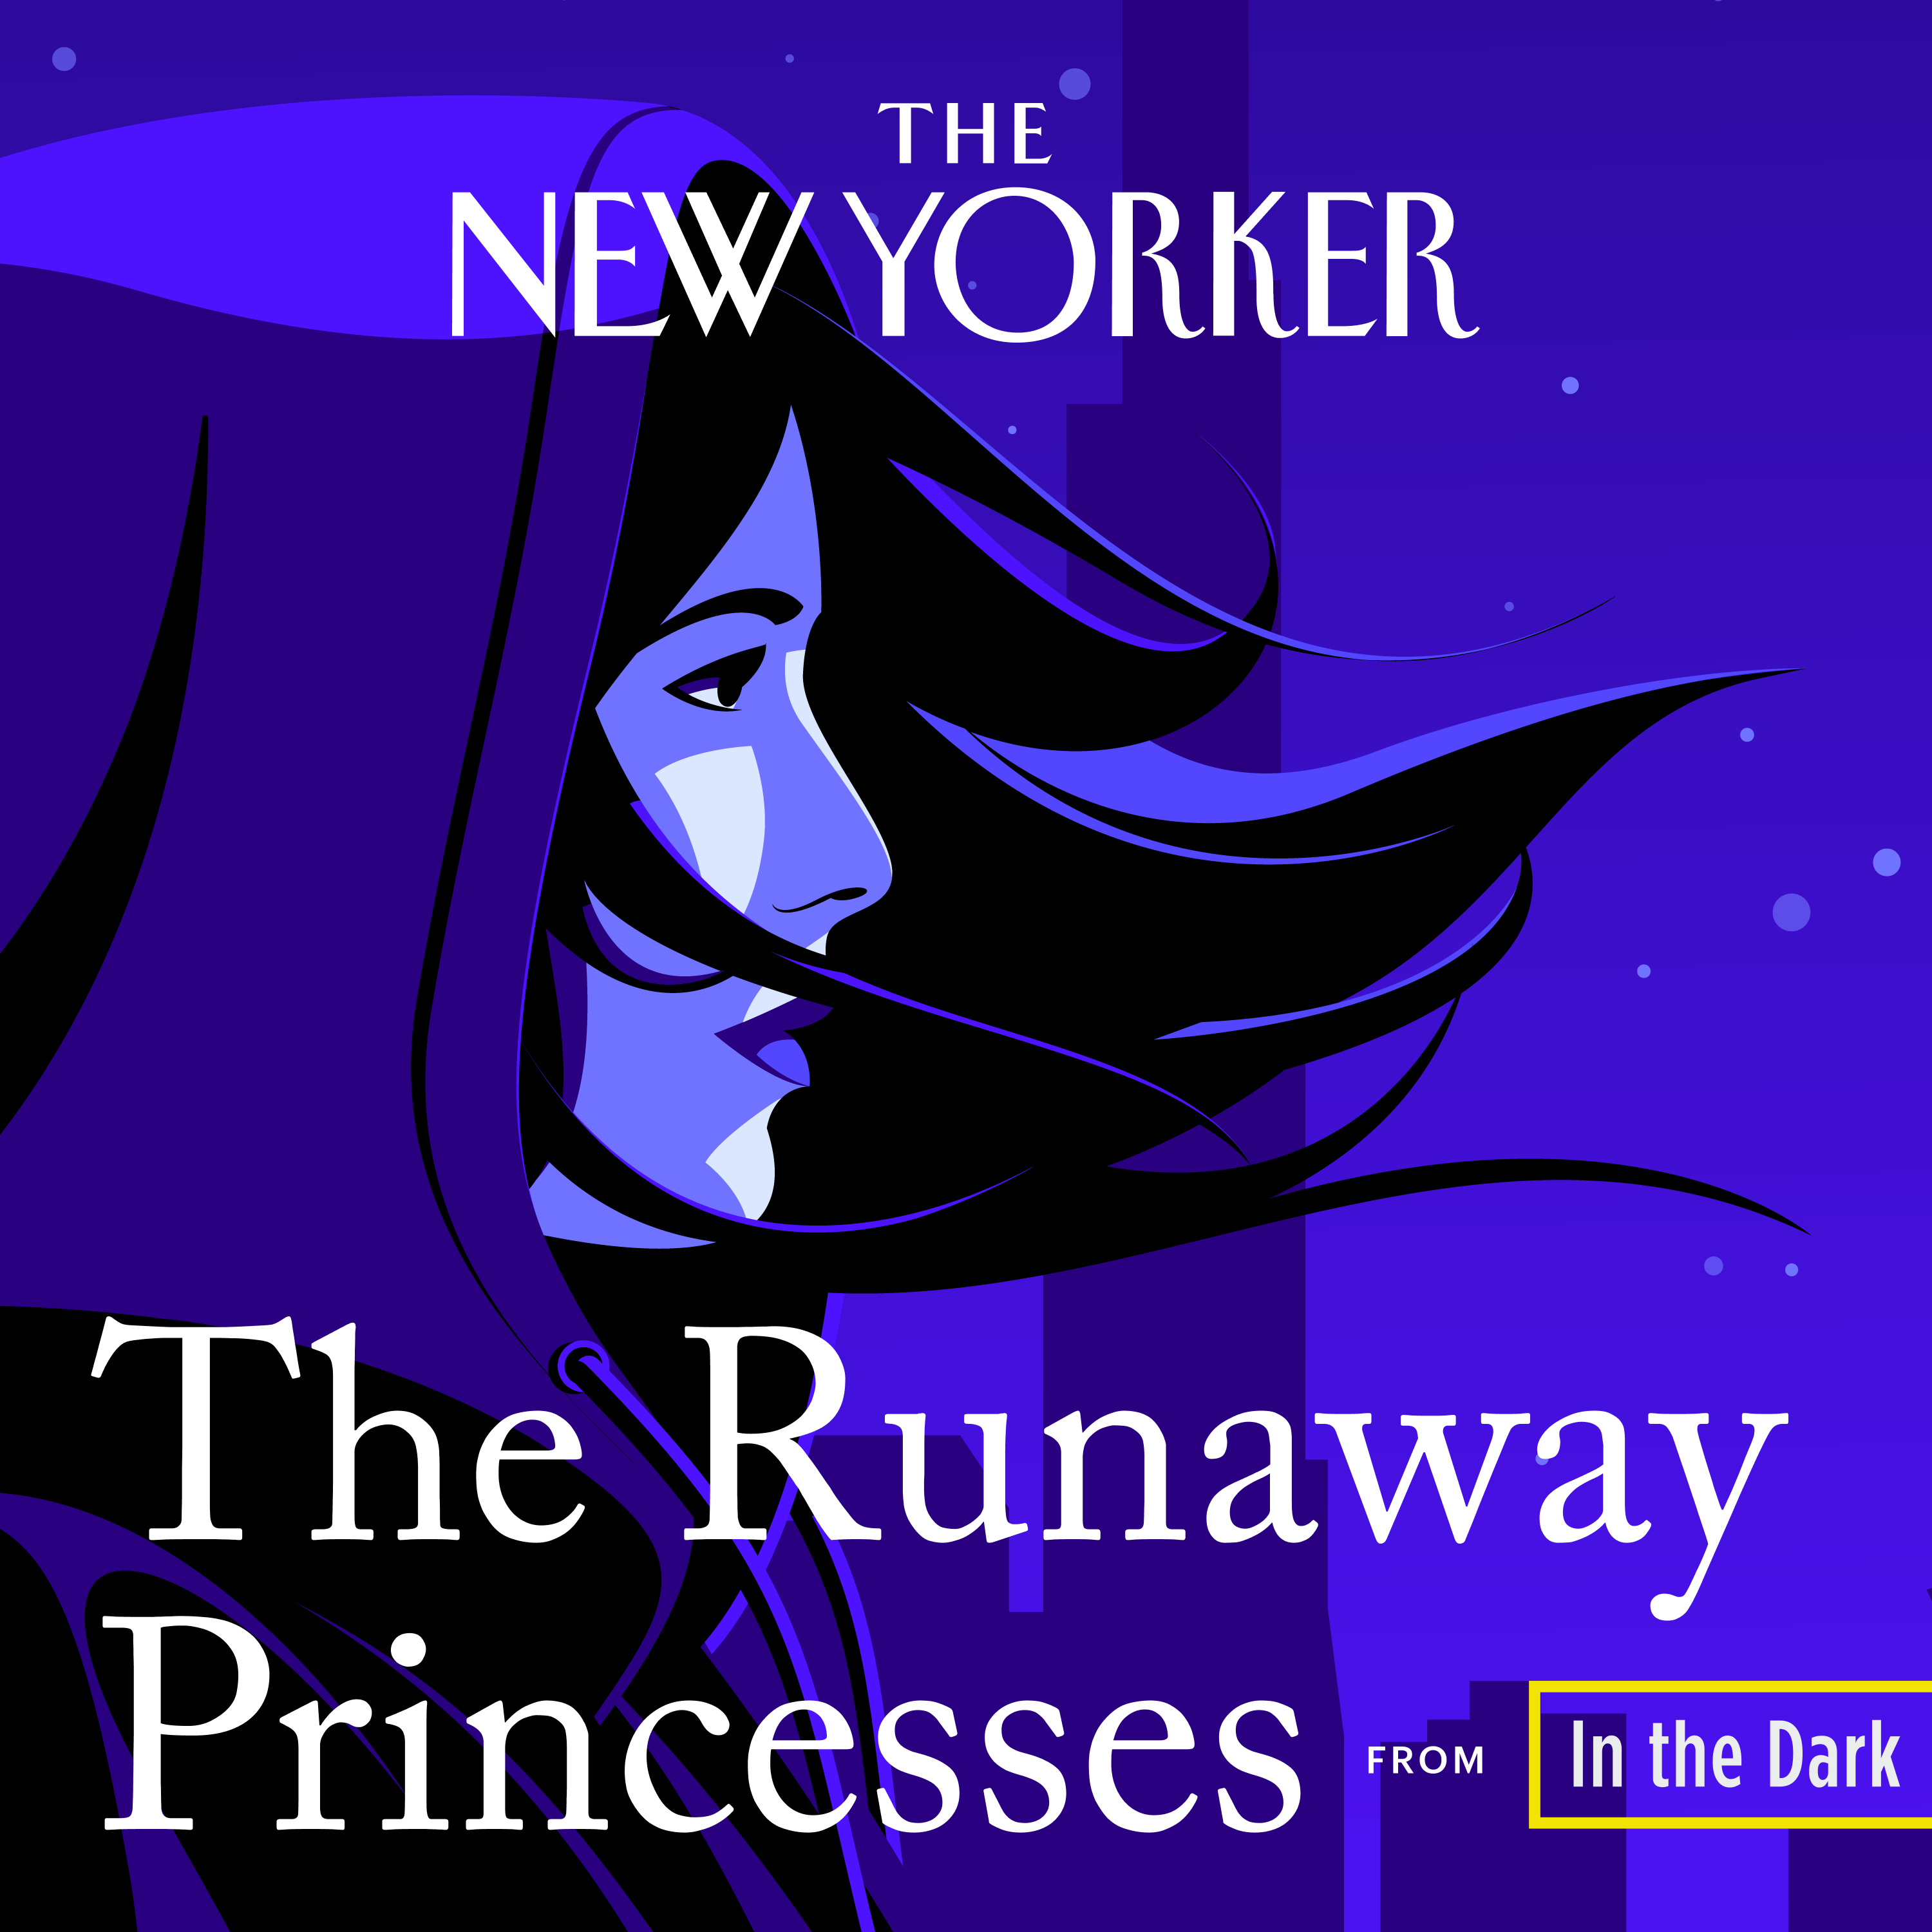 The Runaway Princesses, Episode 4: Hostage